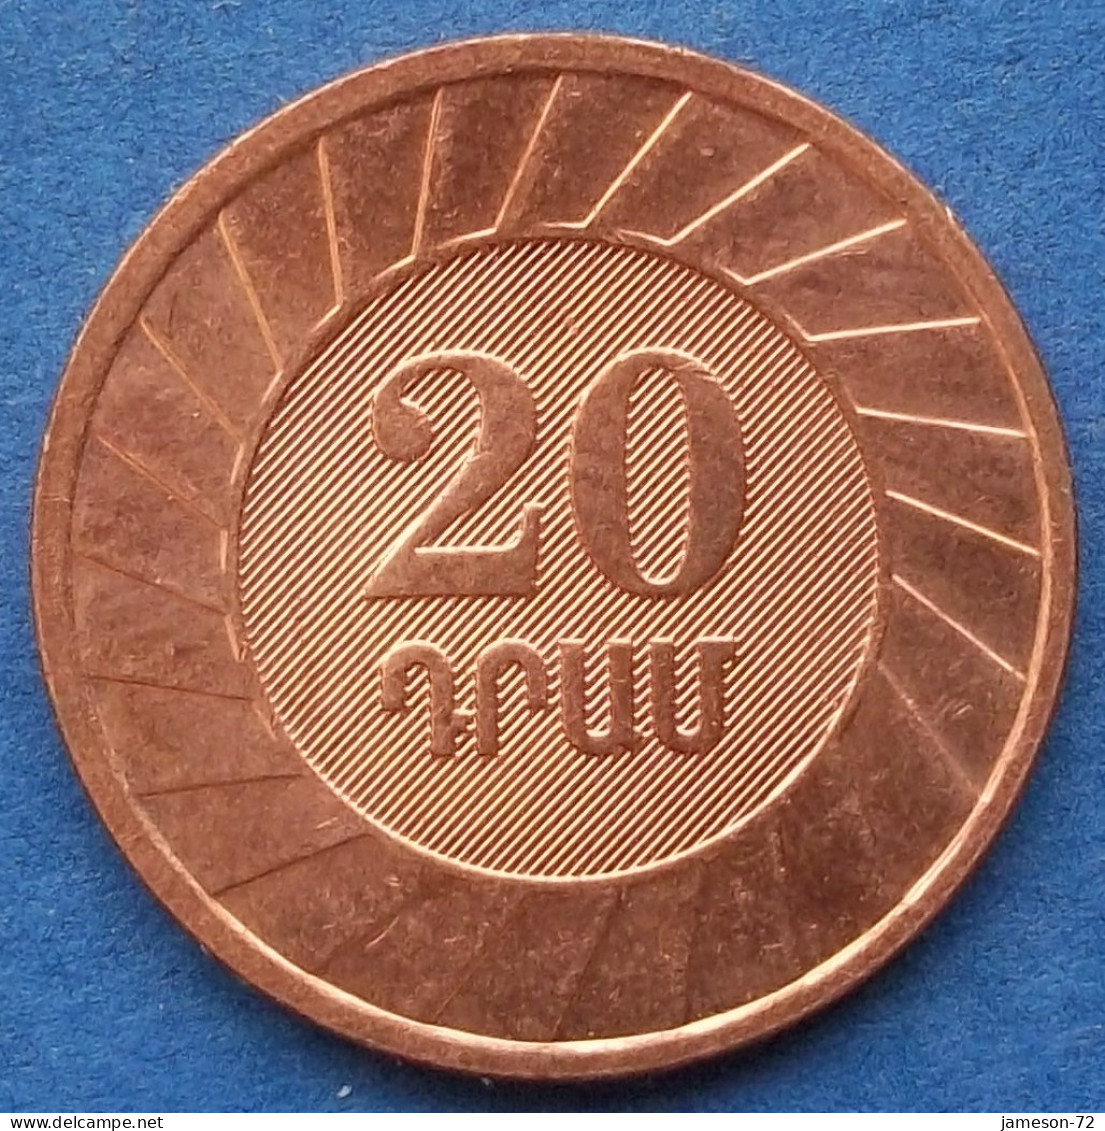 ARMENIA - 20 Dram 2003 KM# 93 Independent Republic (1991) - Edelweiss Coins - Armenia